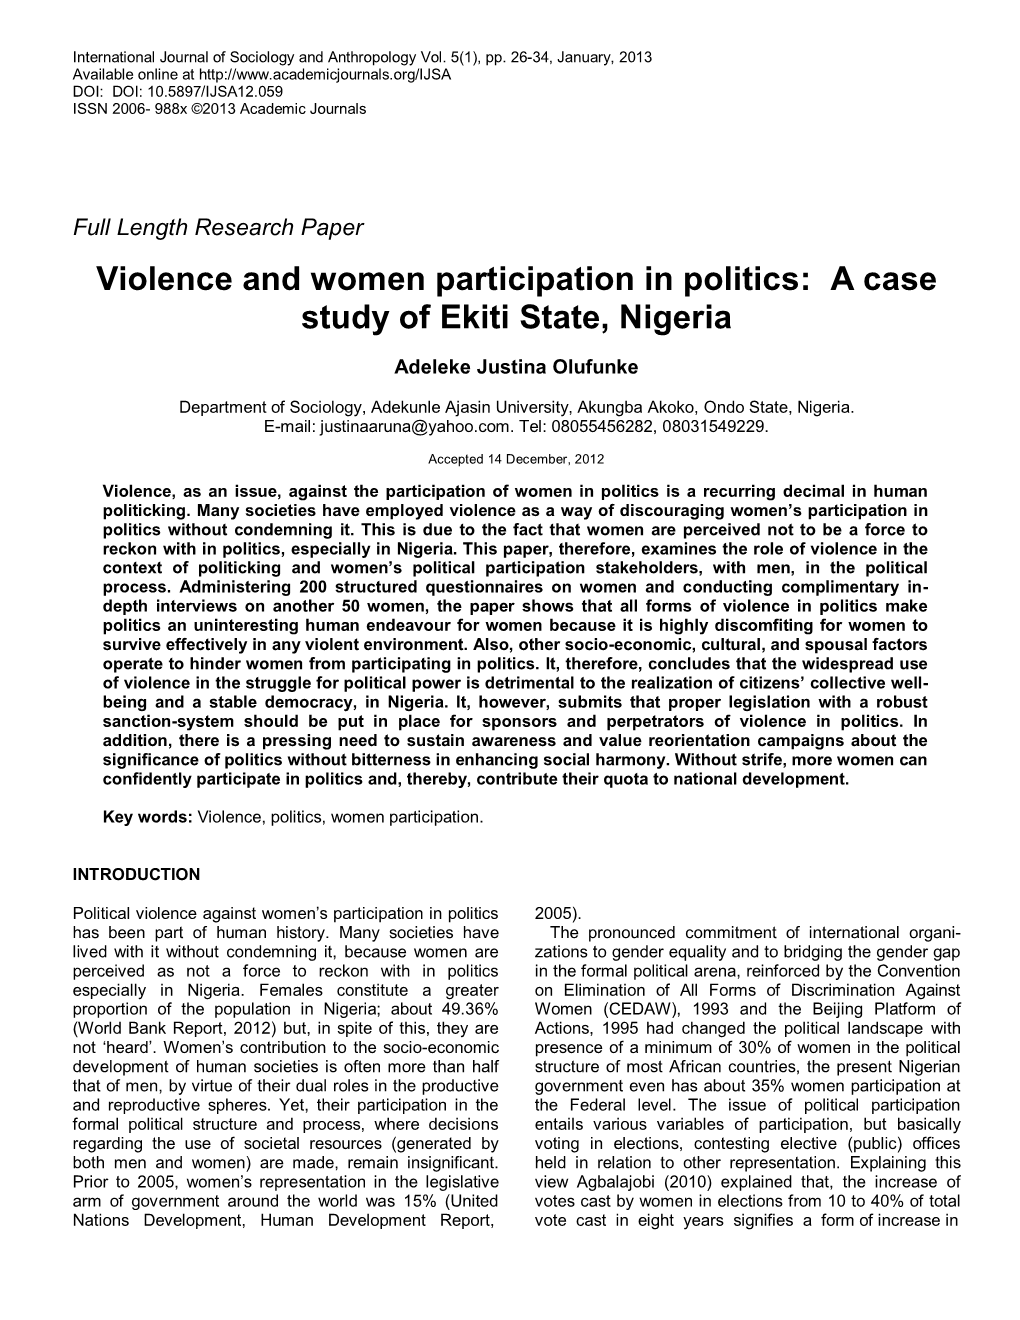 Violence and Women Participation in Politics: a Case Study of Ekiti State, Nigeria